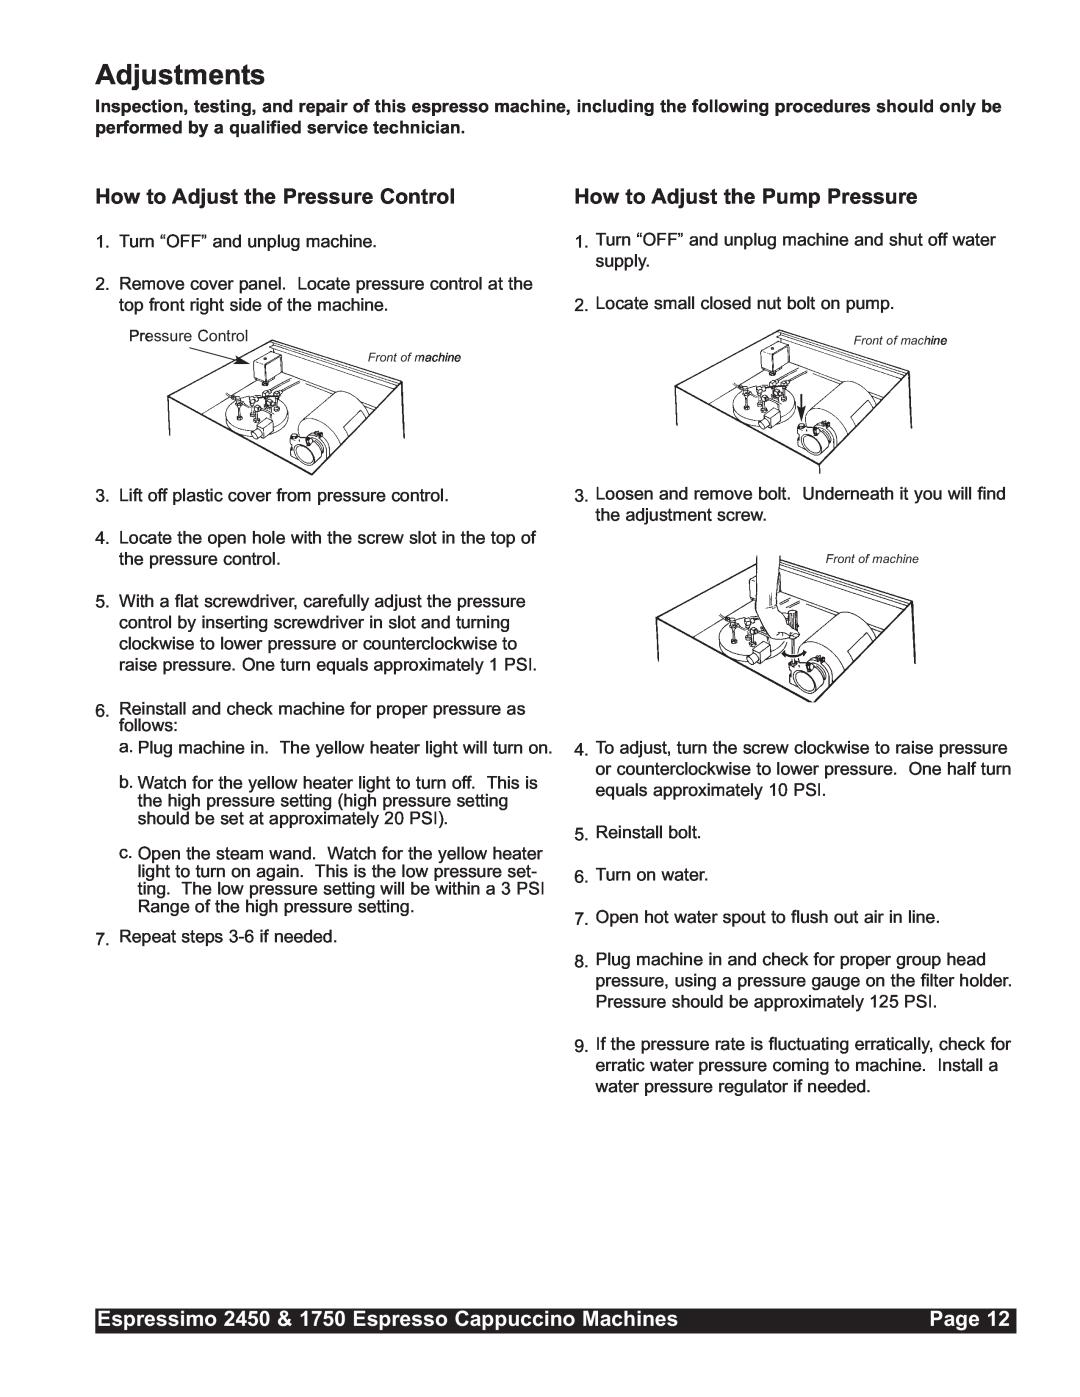 Grindmaster 1750, 2450 Adjustments, How to Adjust the Pressure Control, How to Adjust the Pump Pressure, Page 